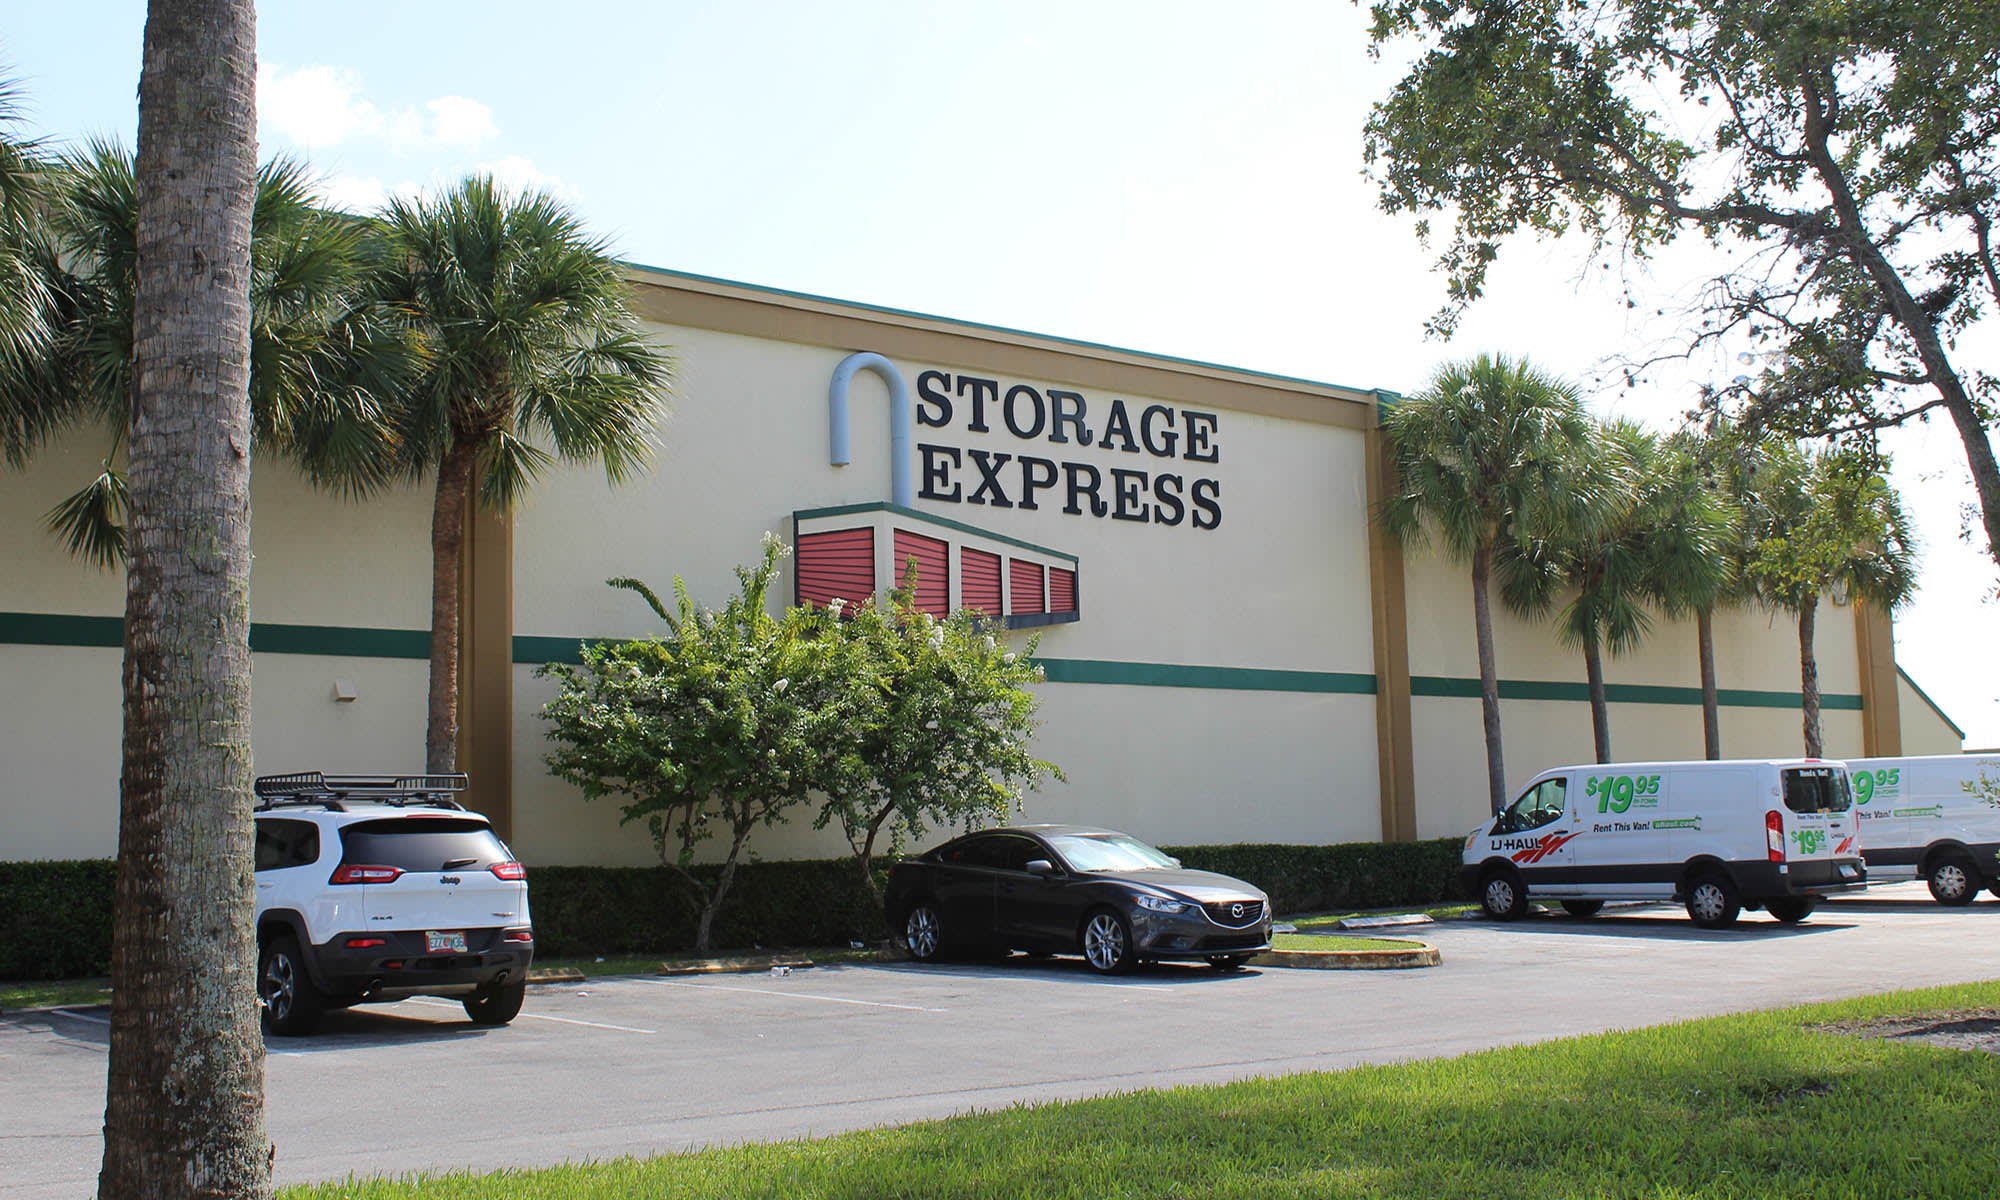 Self storage at Storage Express in Lauderhill, Florida